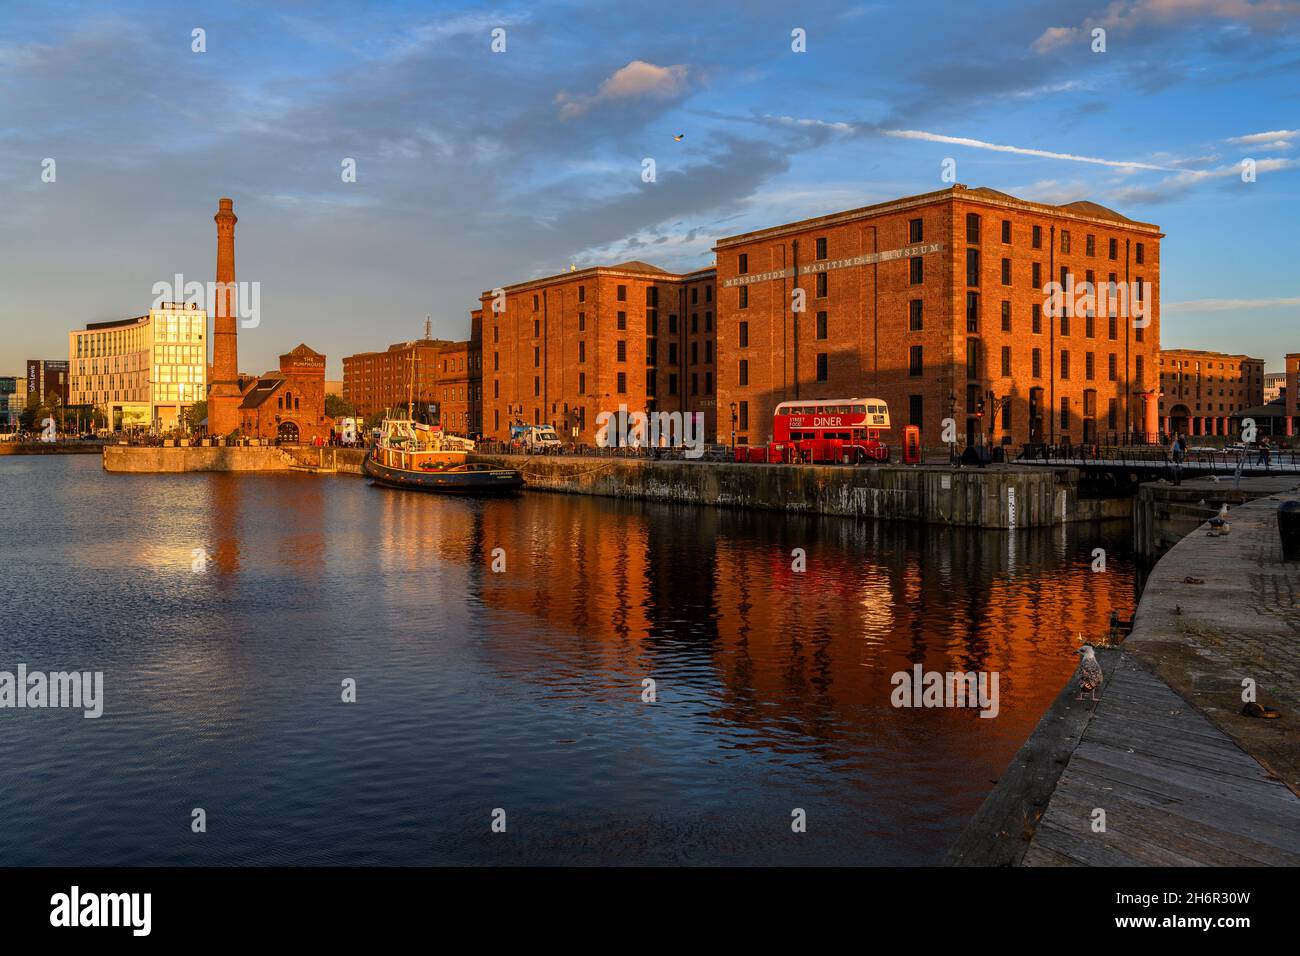 The stunning Royal Albert Docks on Liverpool's historic waterfront. Stock Photo